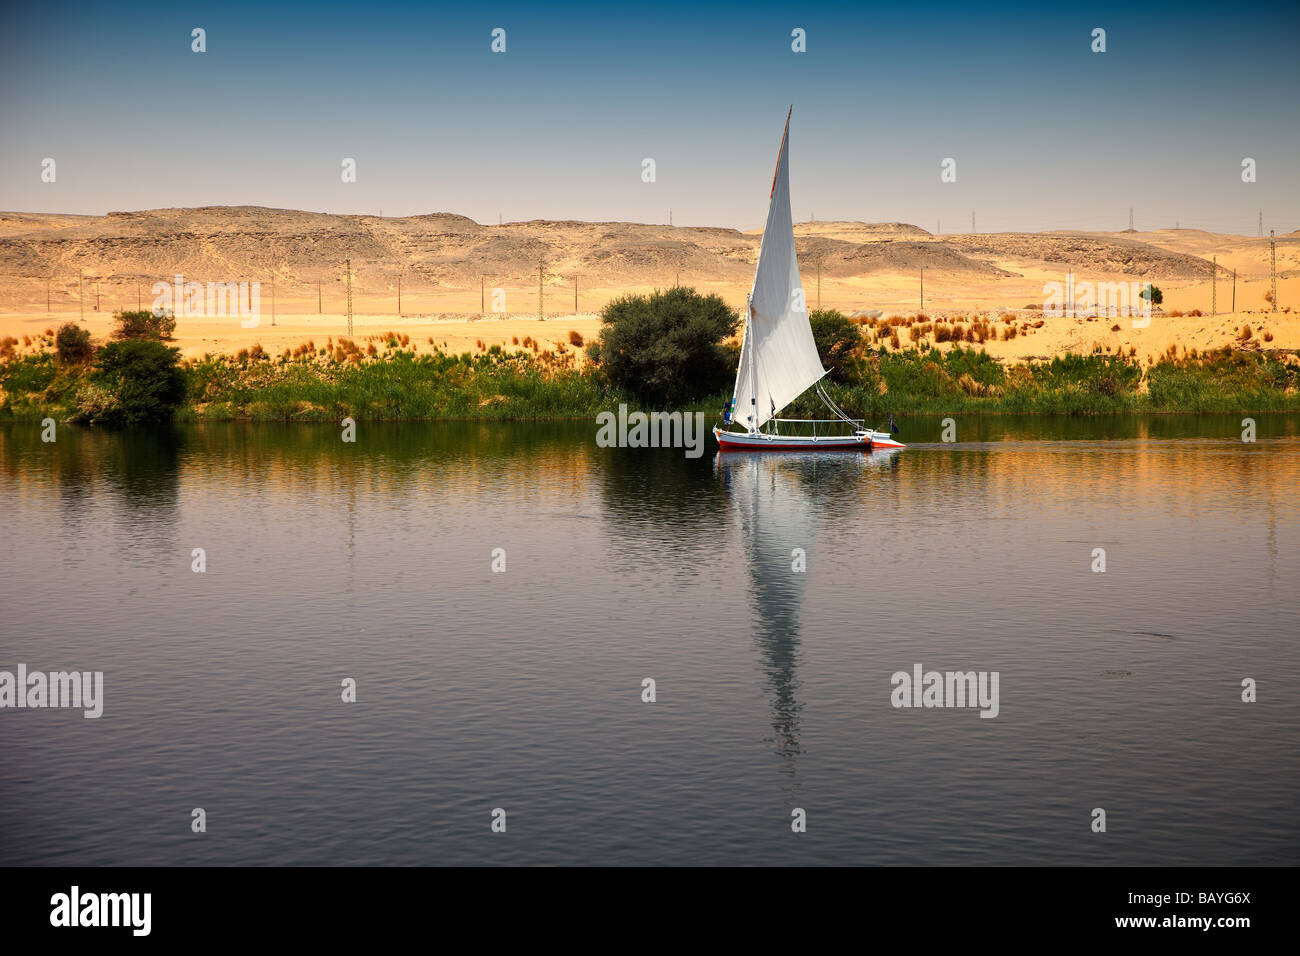 Felucca Sailing Boat on the River Nile near Aswan, Egypt Stock Photo